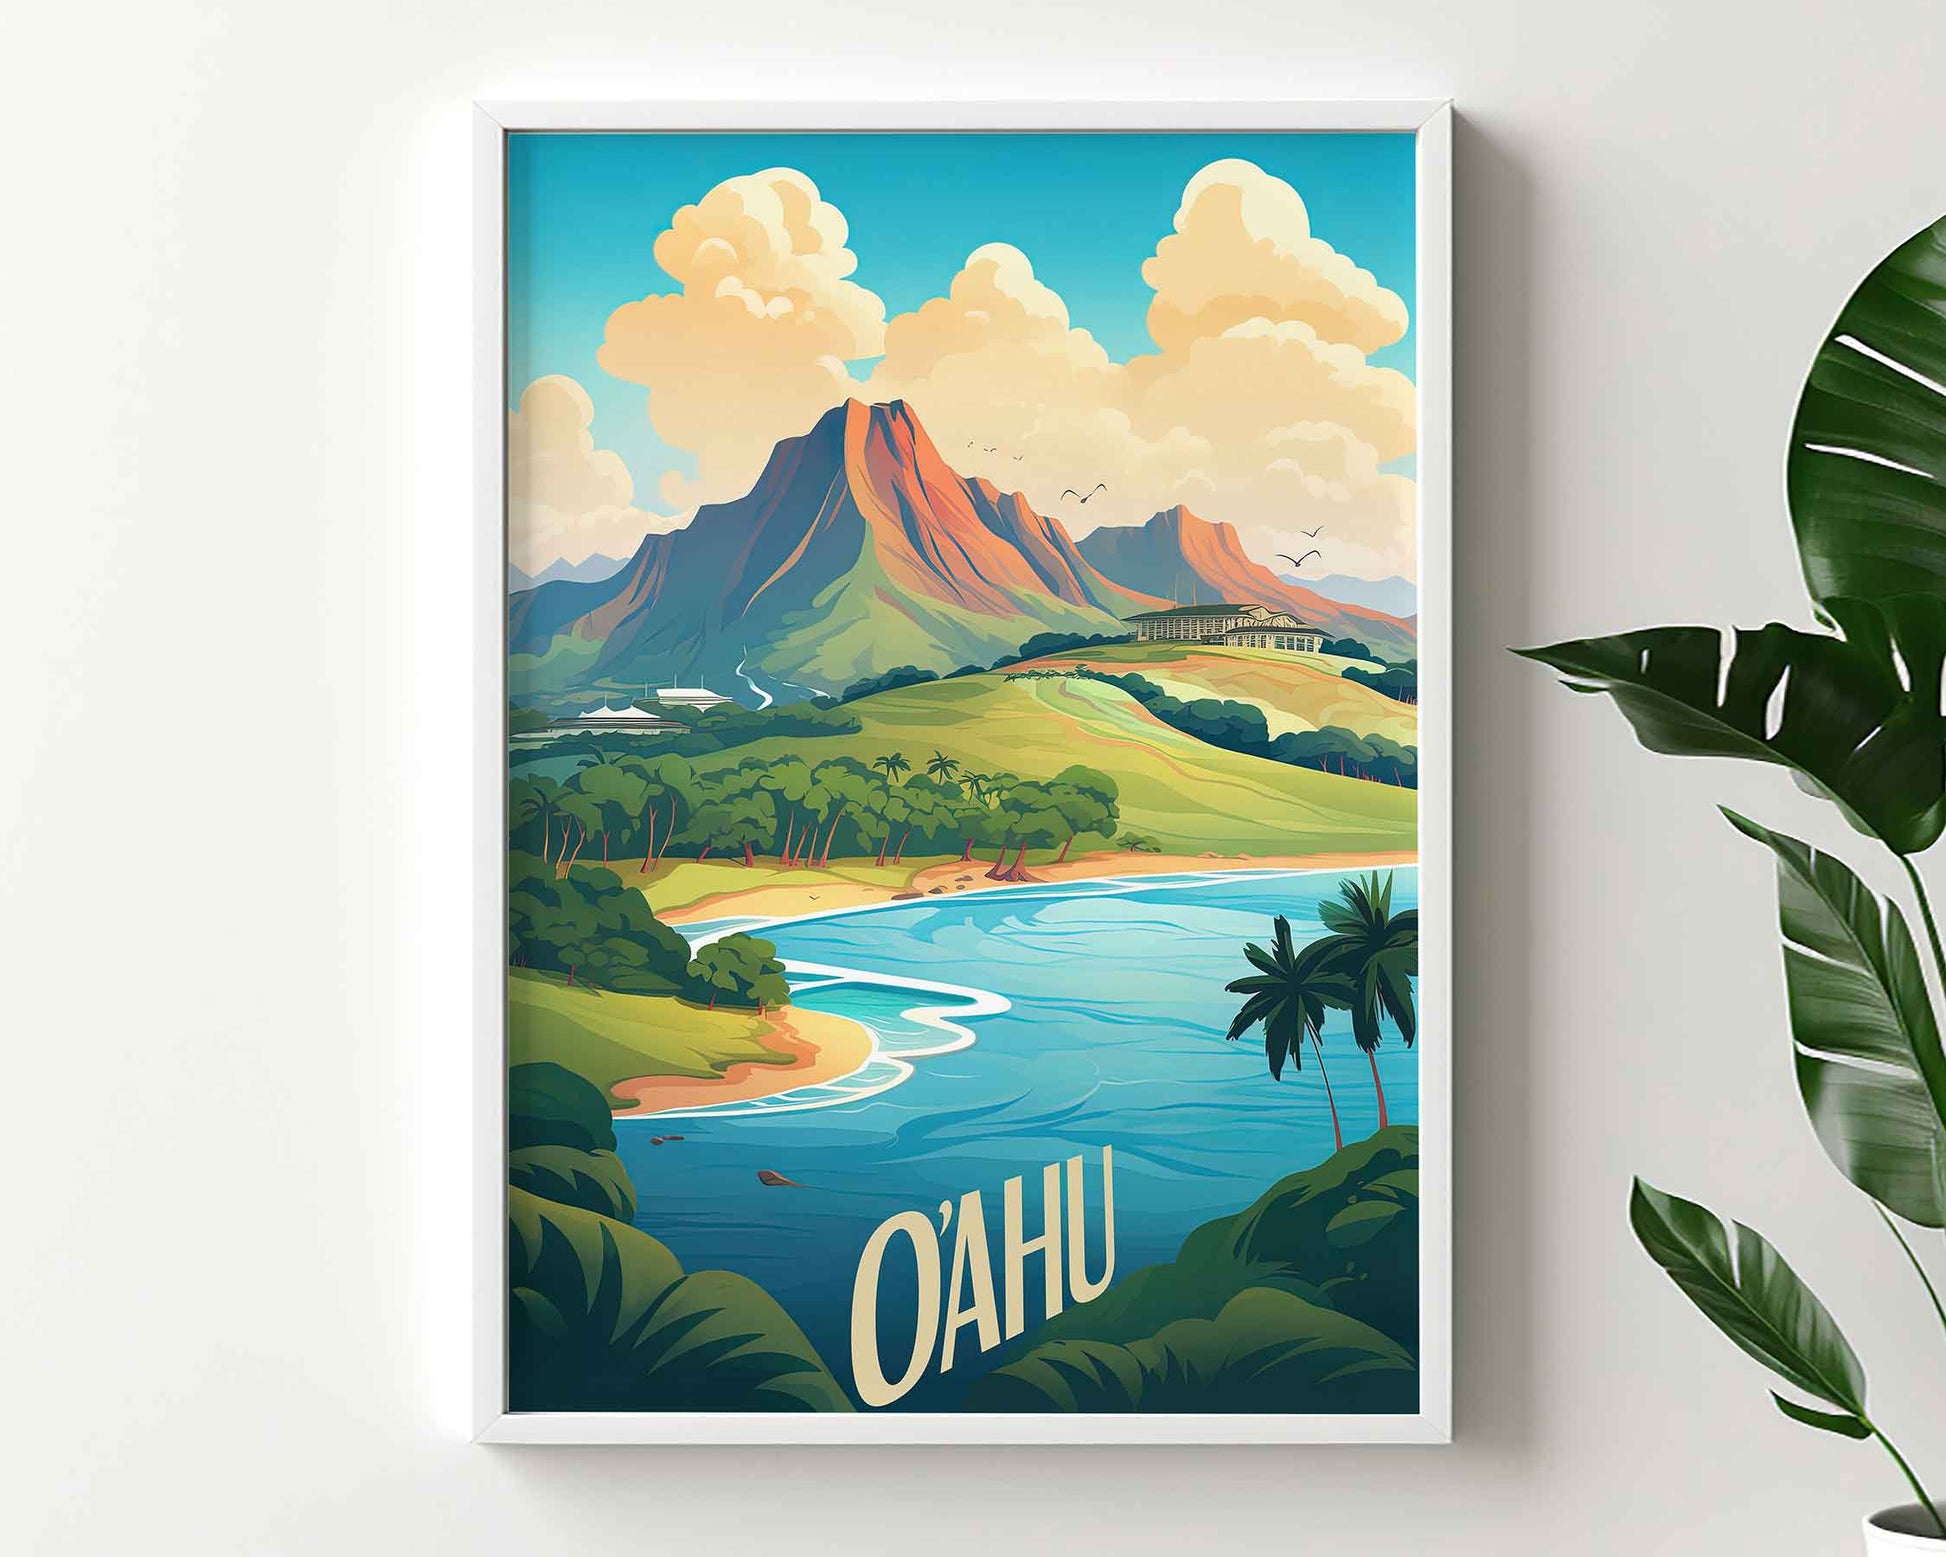 Framed Image of Oahu Hawaii Travel Poster Prints Wall Art Illustration